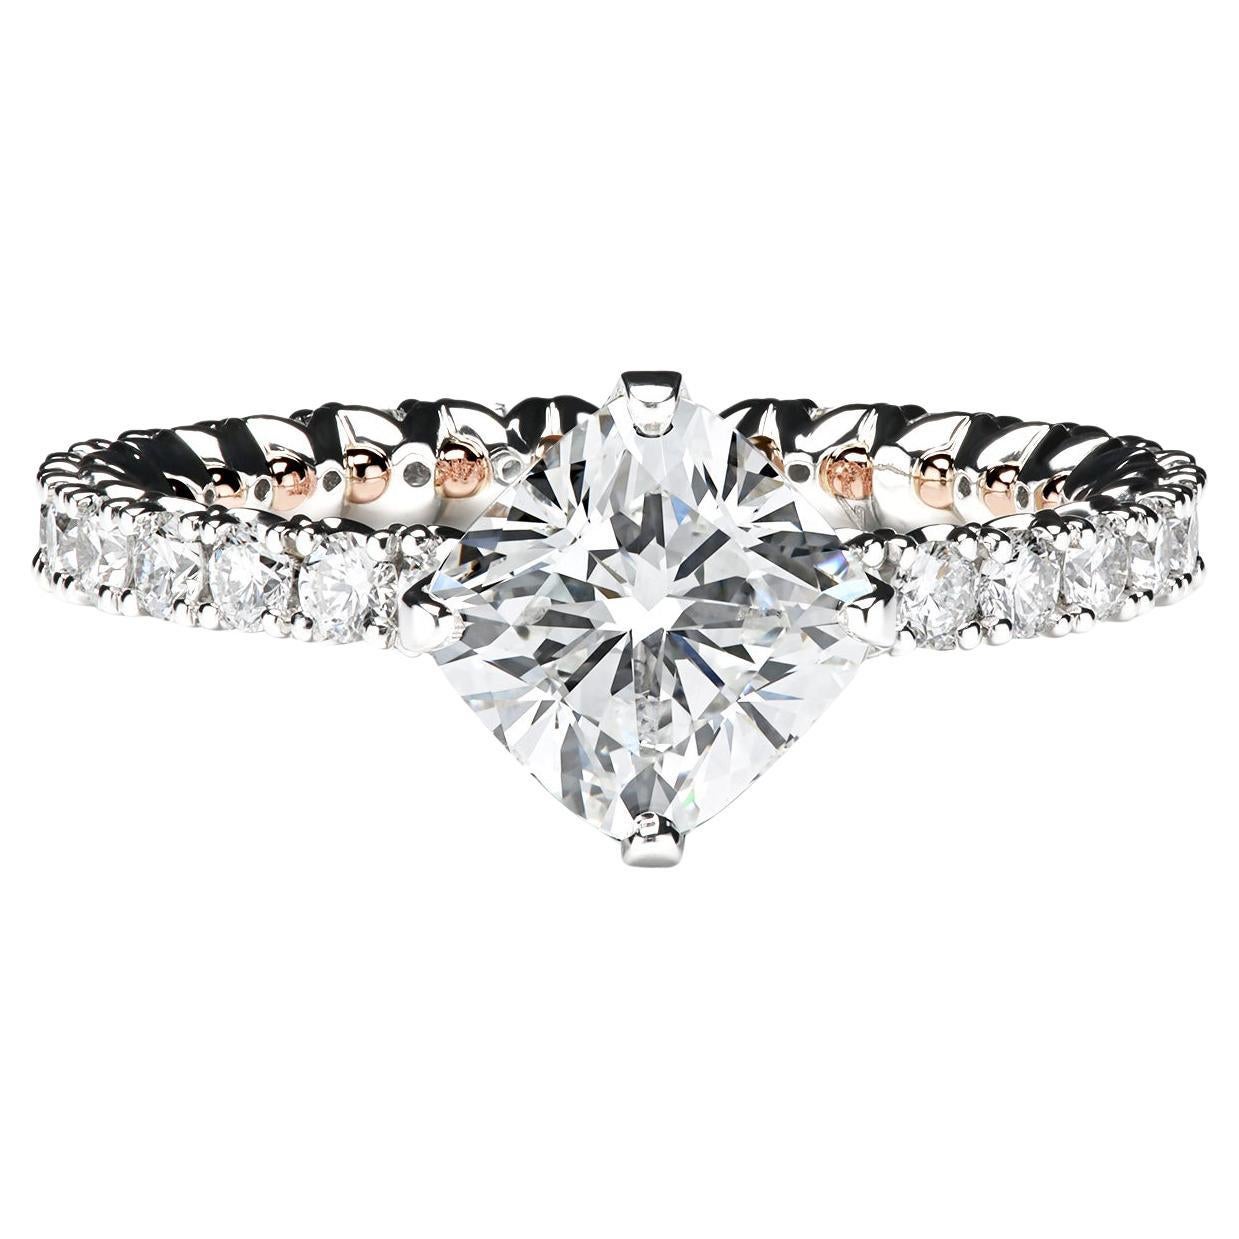 Leon Mege Custom Made Diamond Engagement Ring  For Sale